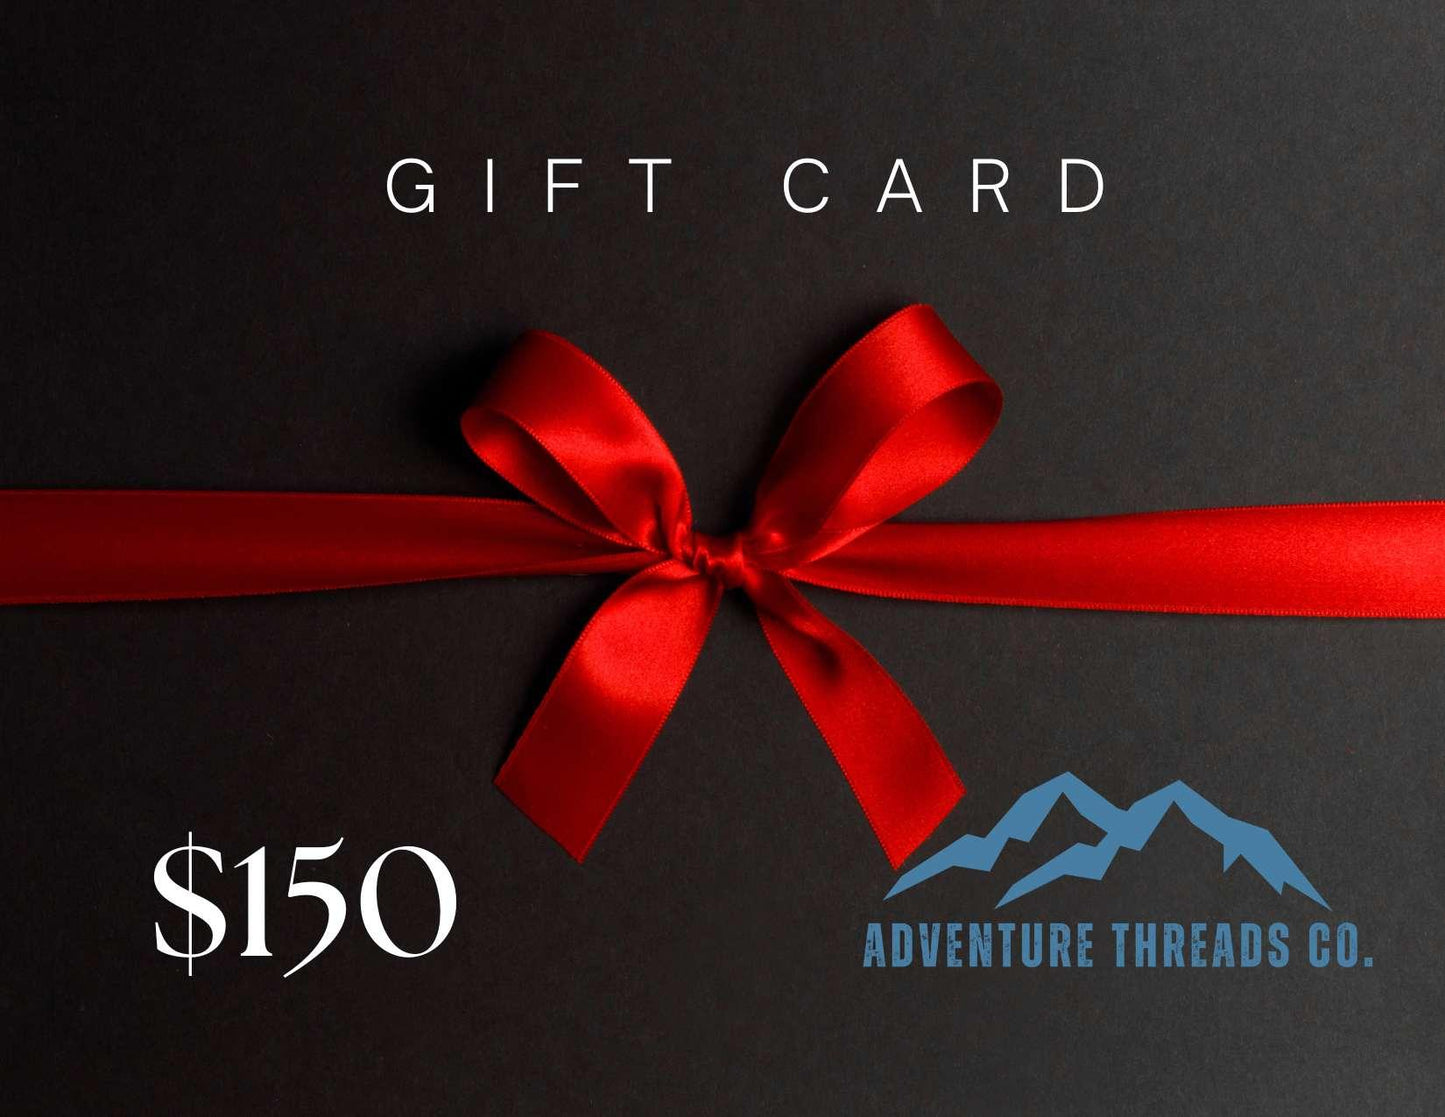 Adventure Threads Company Gift Card - Adventure Threads Company